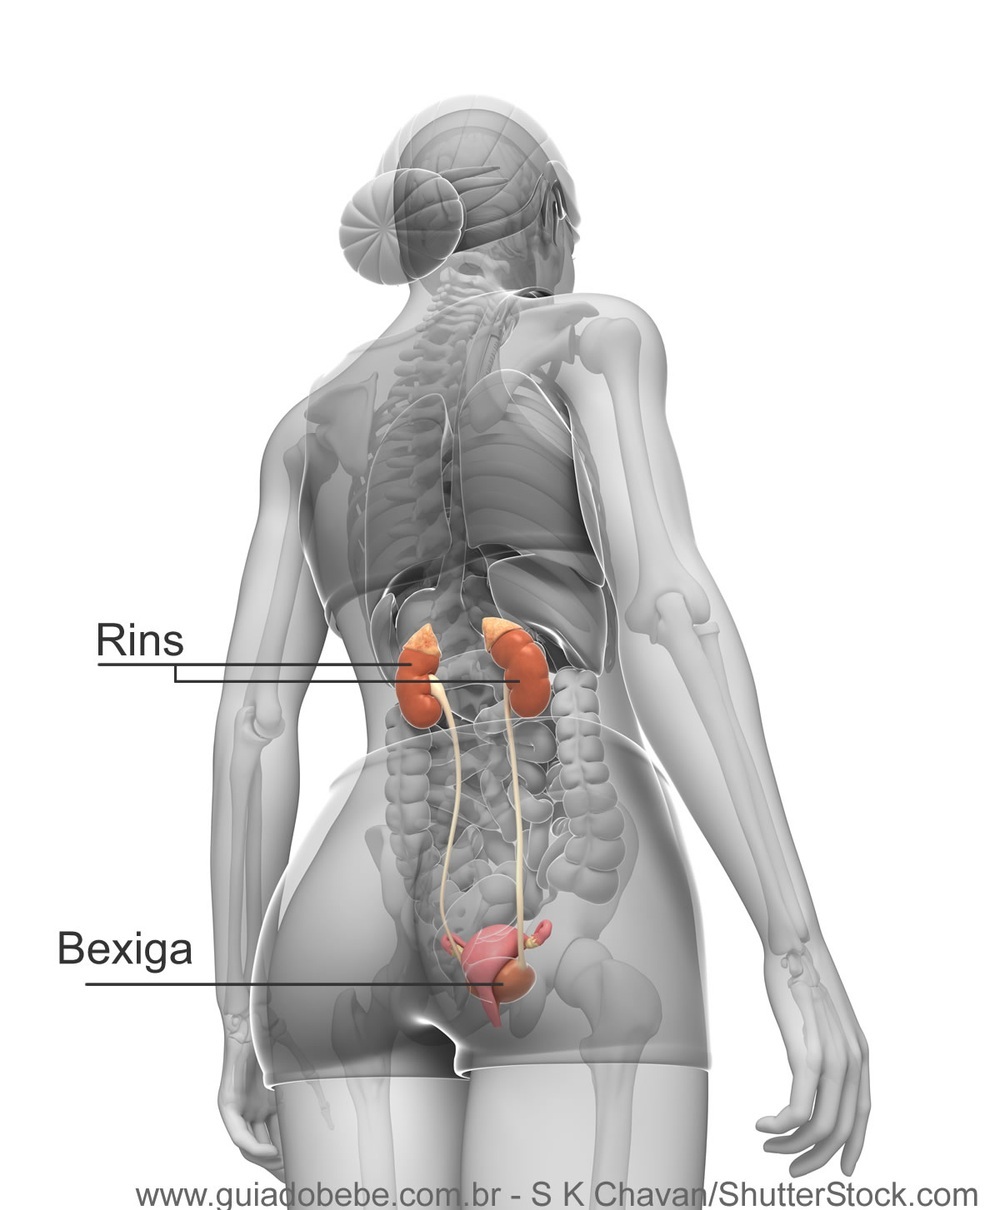 Sistema urinário feminino - foto: S K Chavan/ShutterStock.com